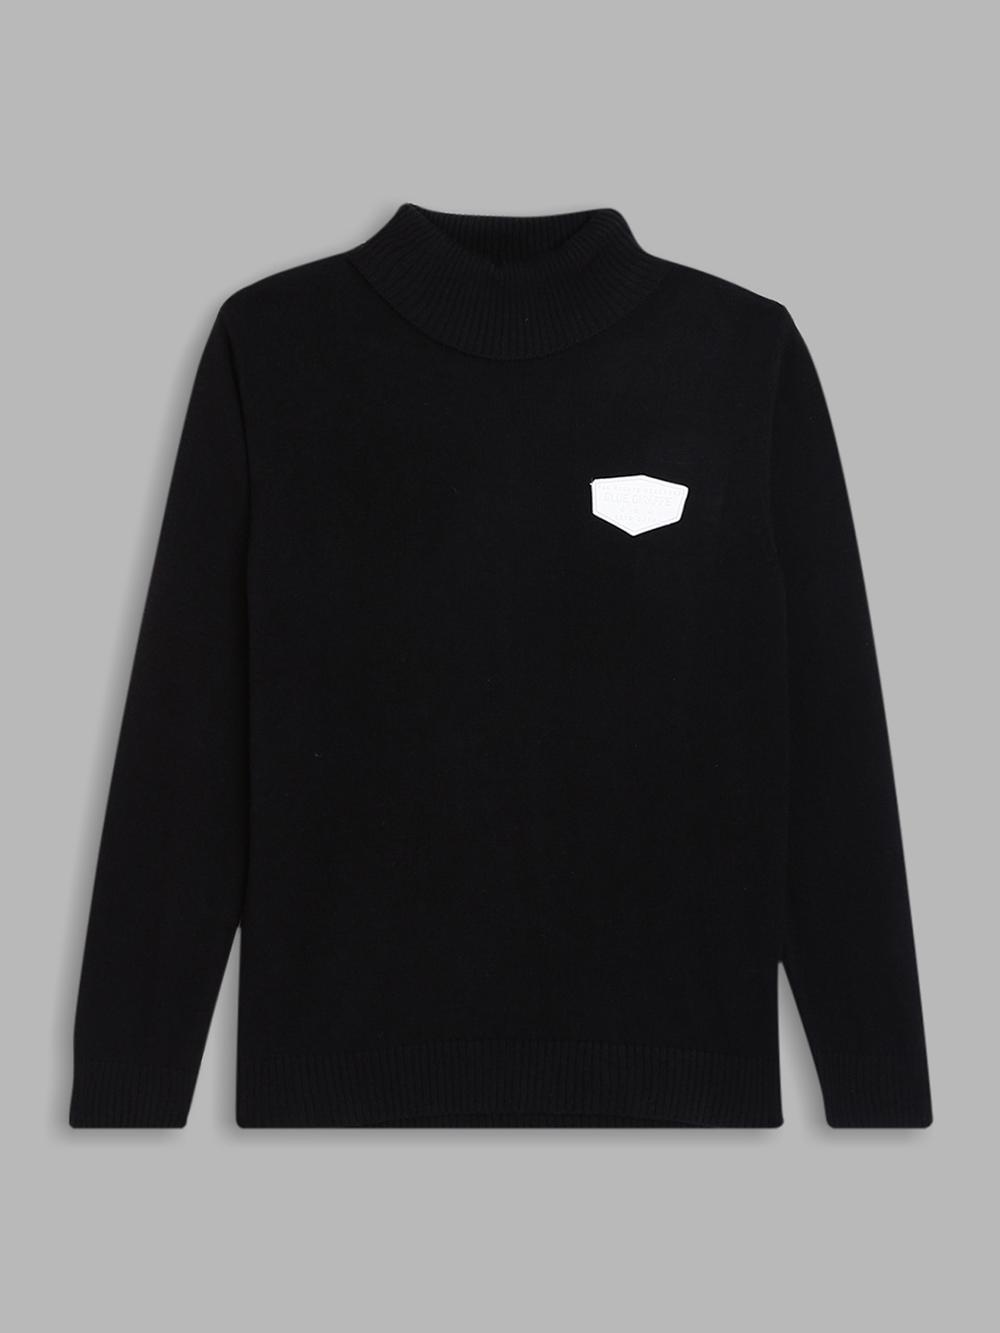 black-solid-round-neck-sweater